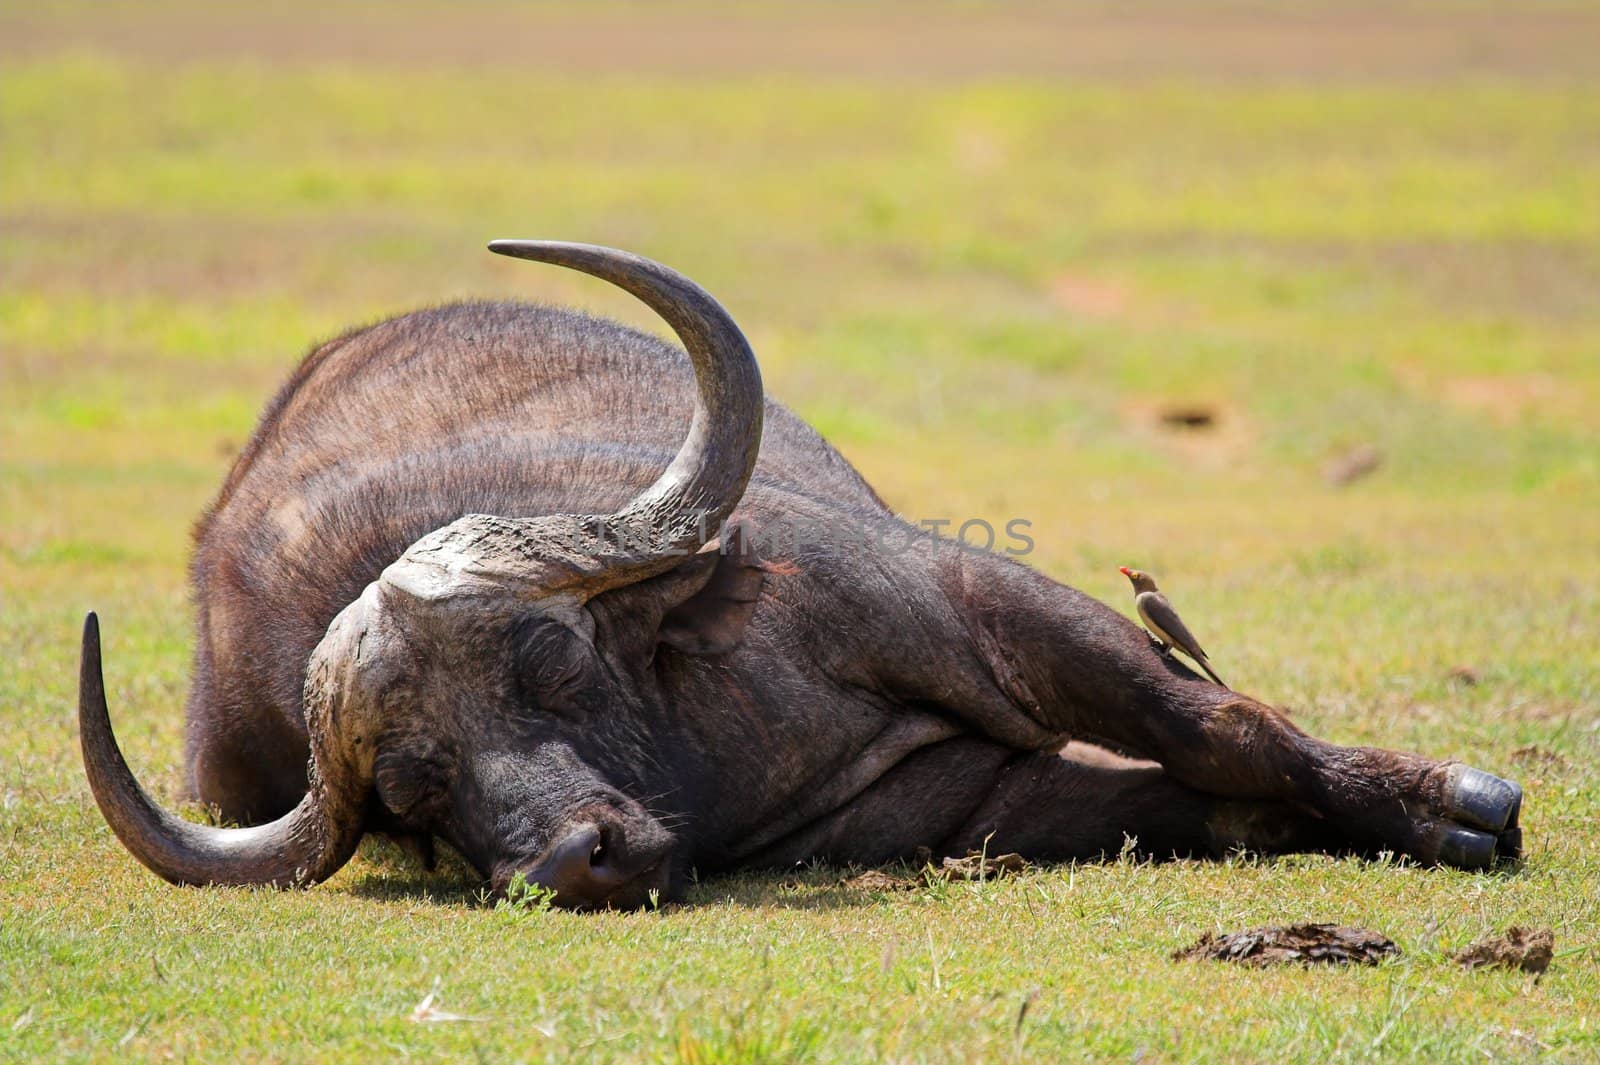 Sleeping Buffalo by nightowlza